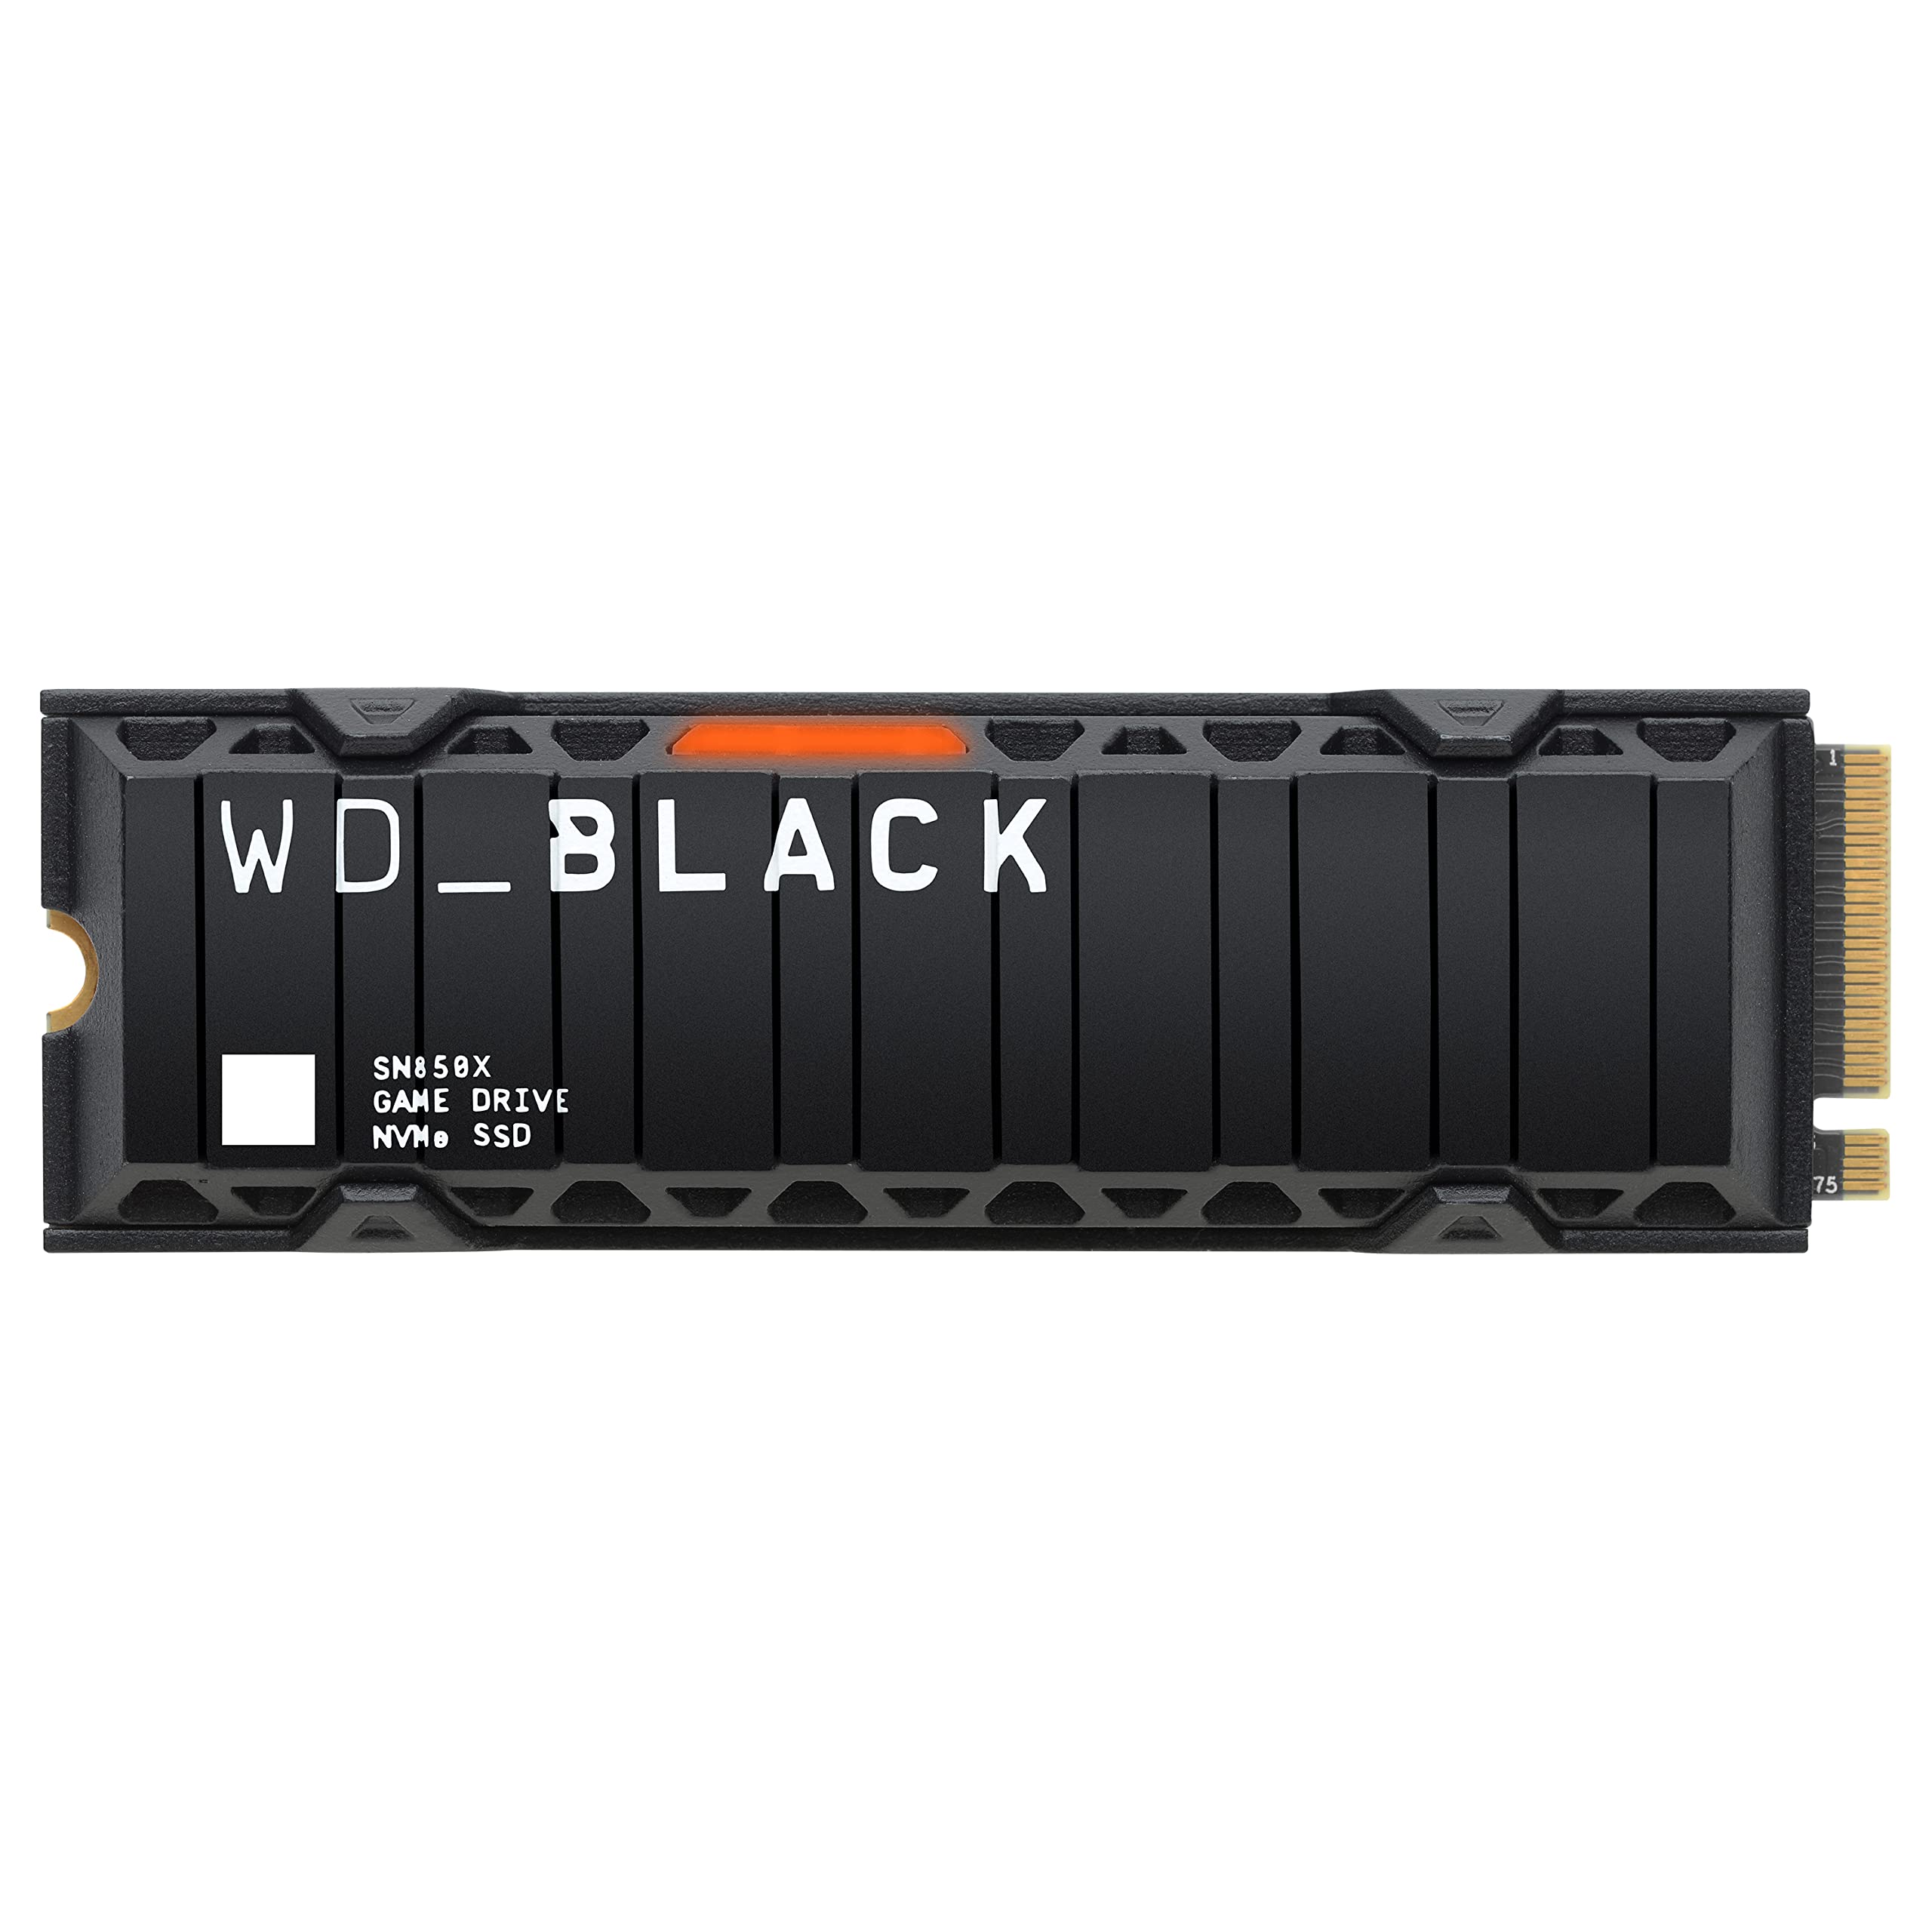 WD_BLACK 2TB SN850X NVMe Internal SSD with Heatsink $160